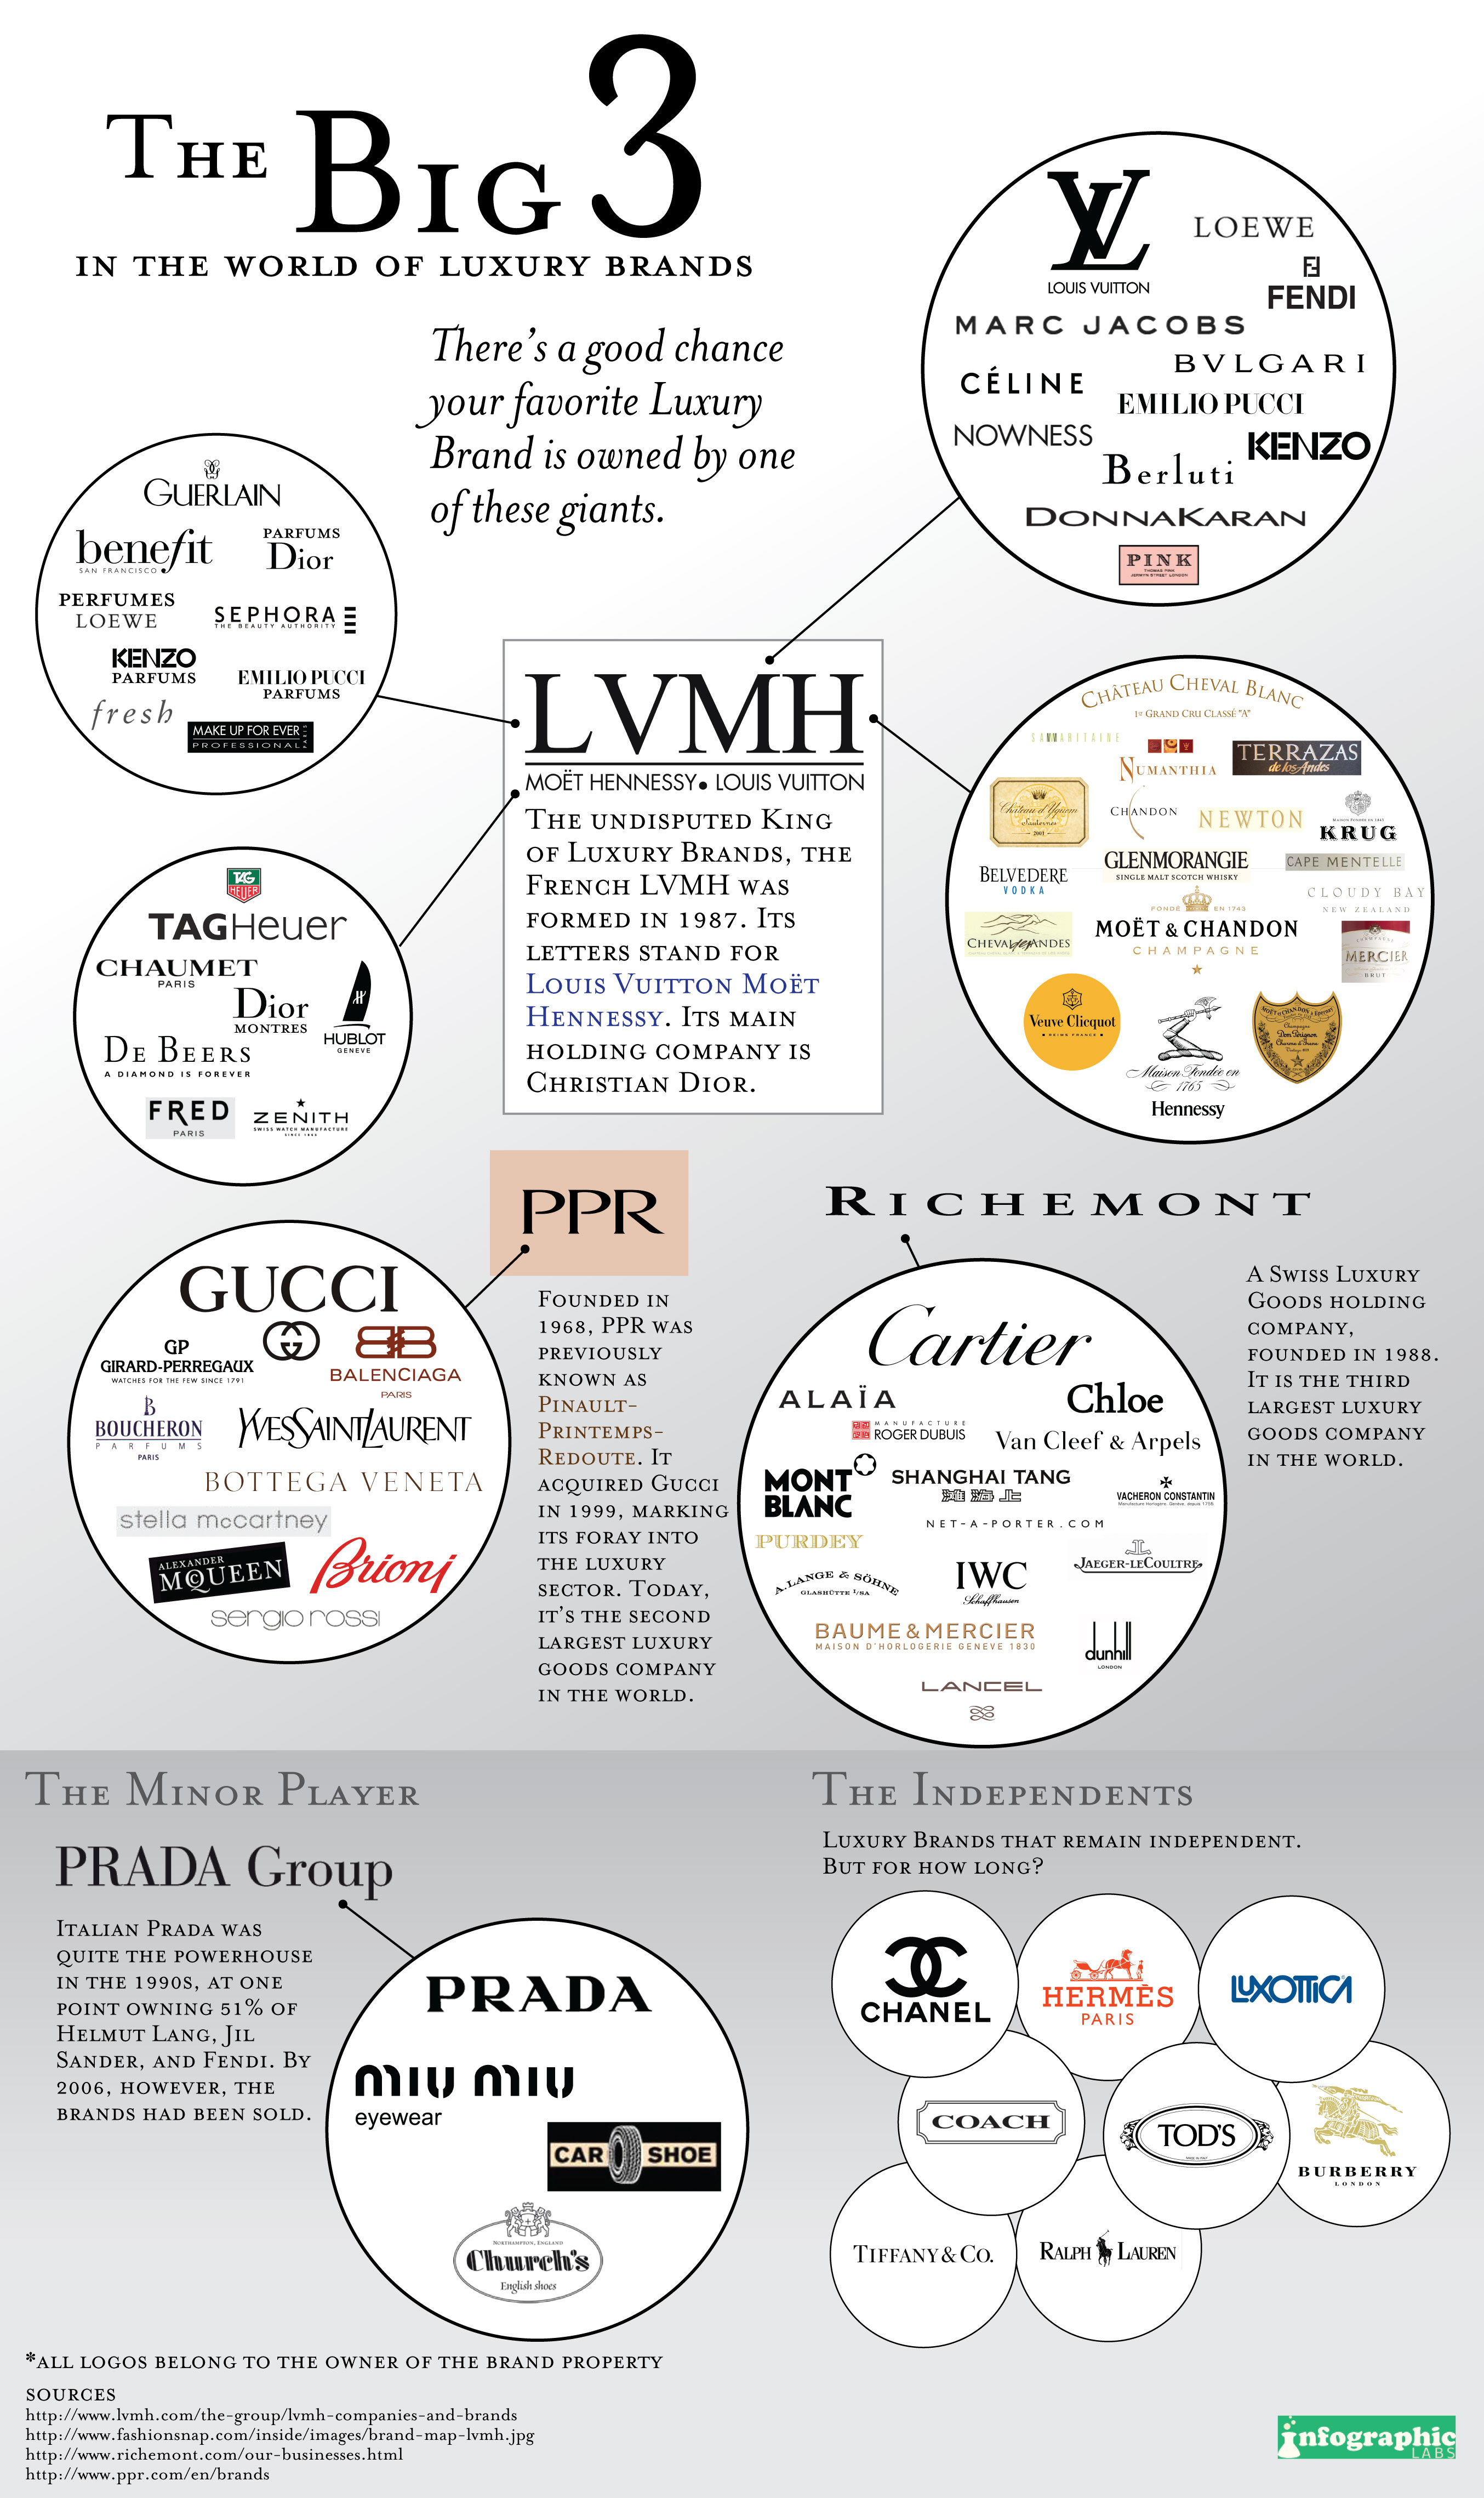 The Big 3 of Luxury Brands
